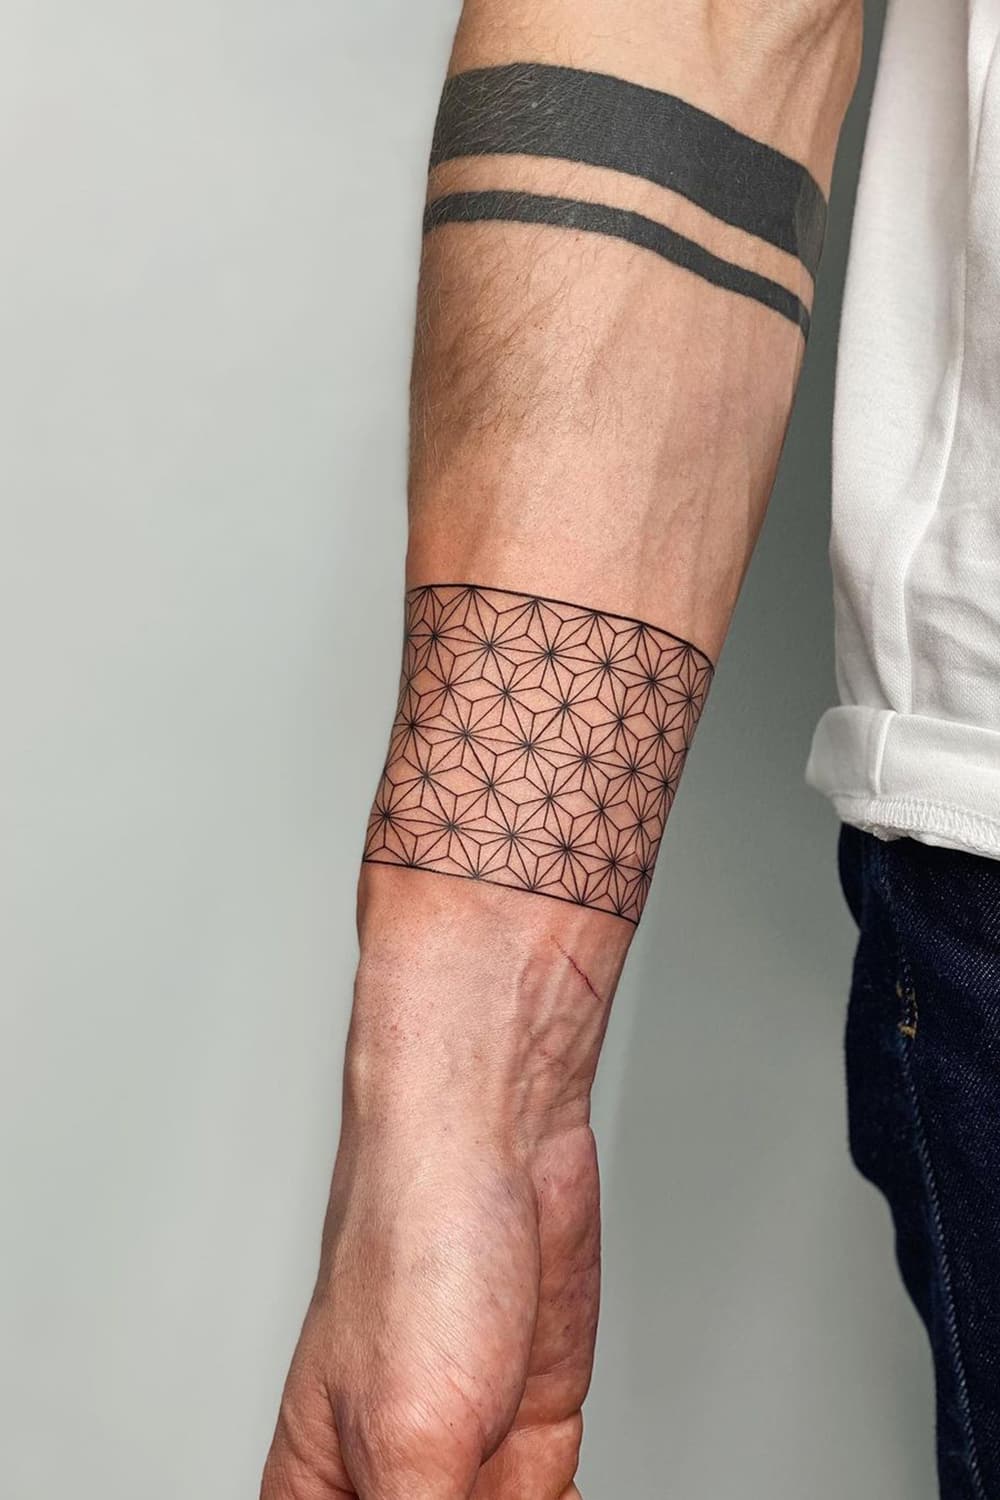 Cool armband tattoo